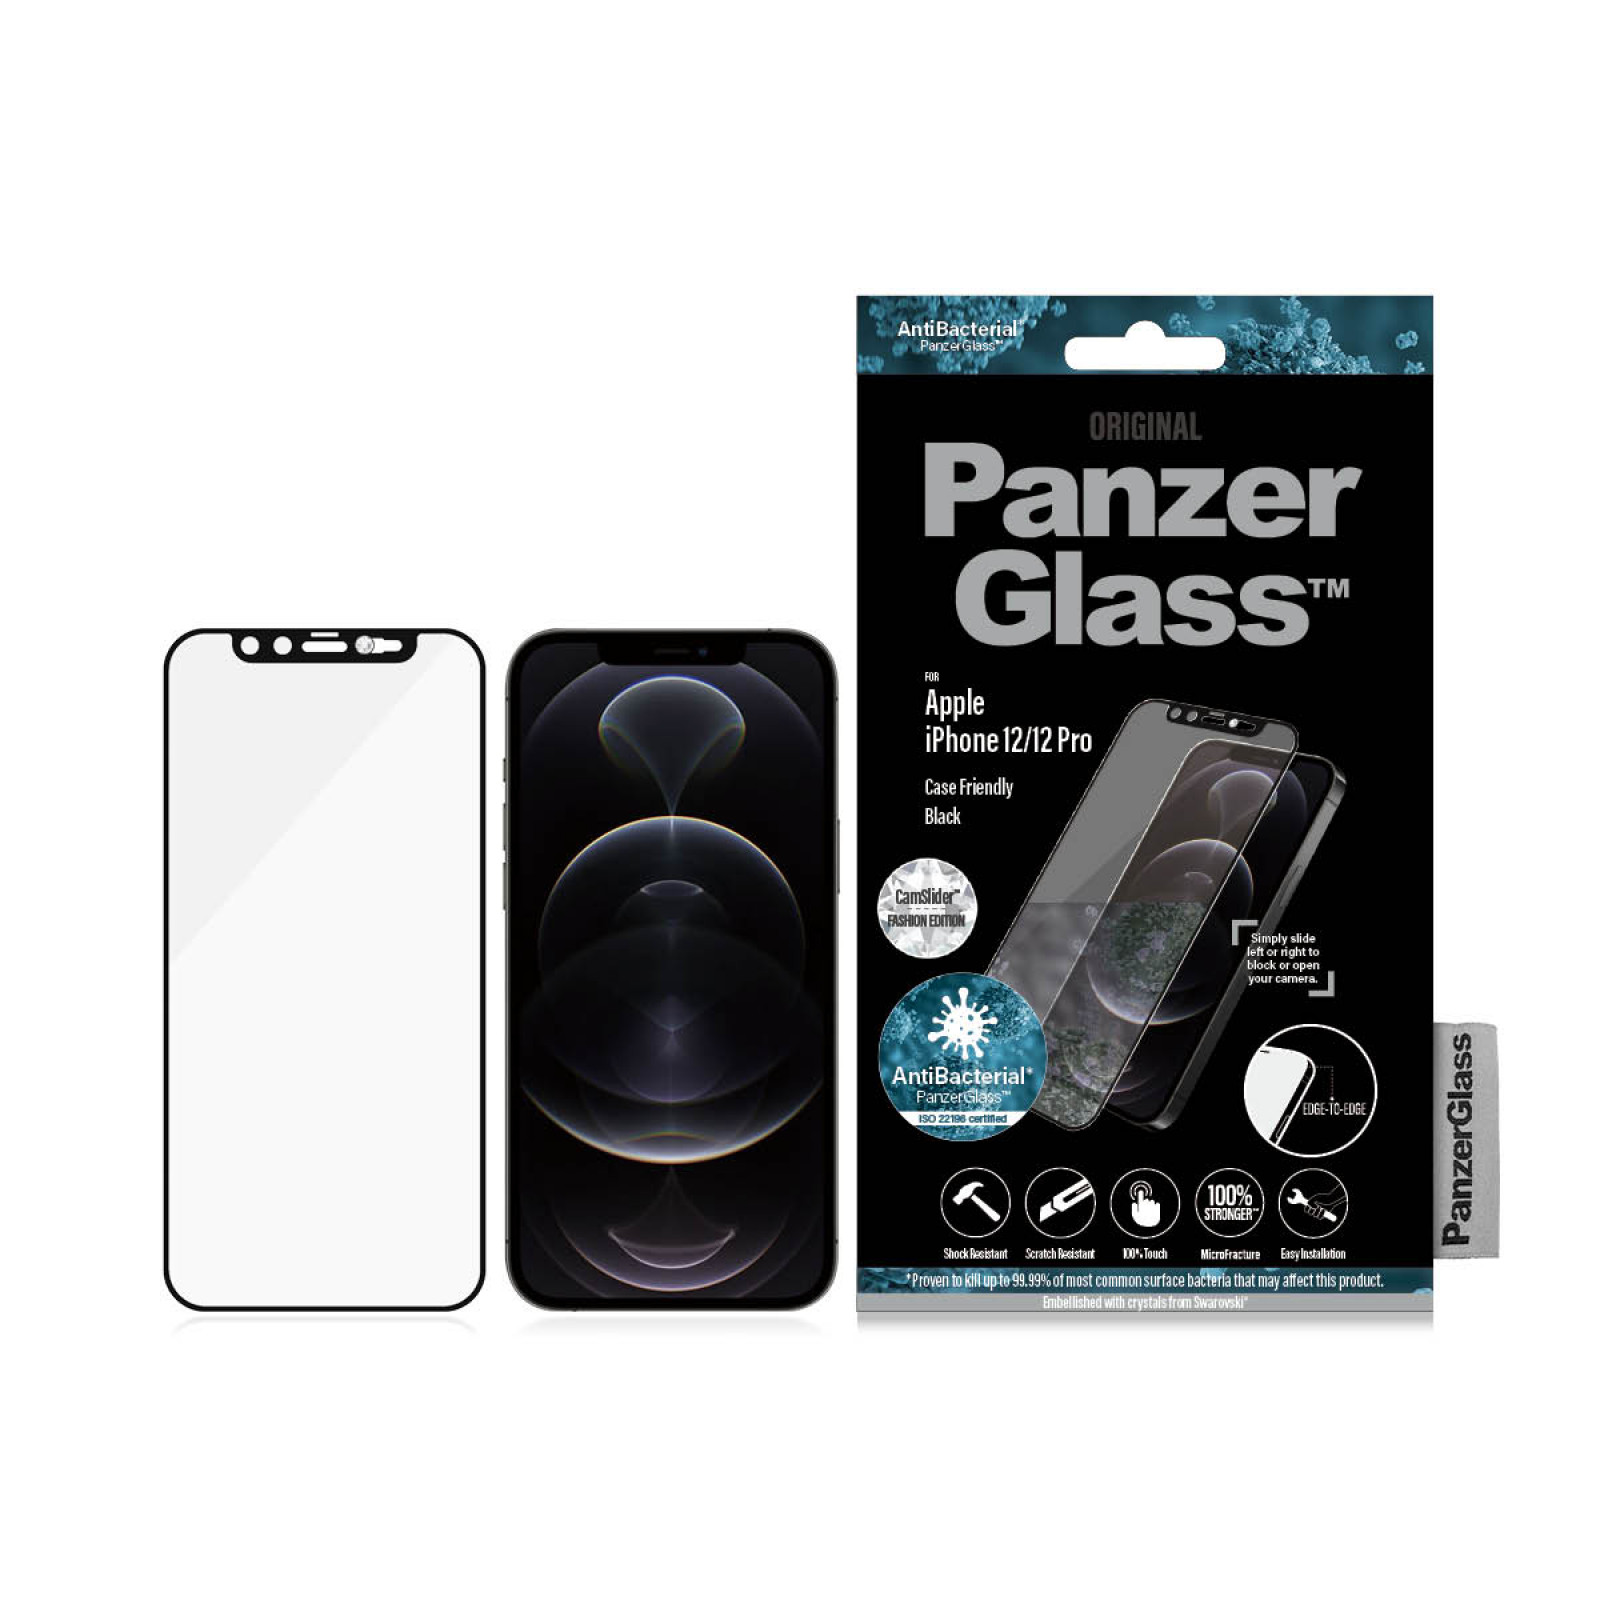 Стъклен протектор PanzerGlass за Apple Iphone 12 /12 Pro, CaseFriendly, CamSlaider, Swarovski -Черен